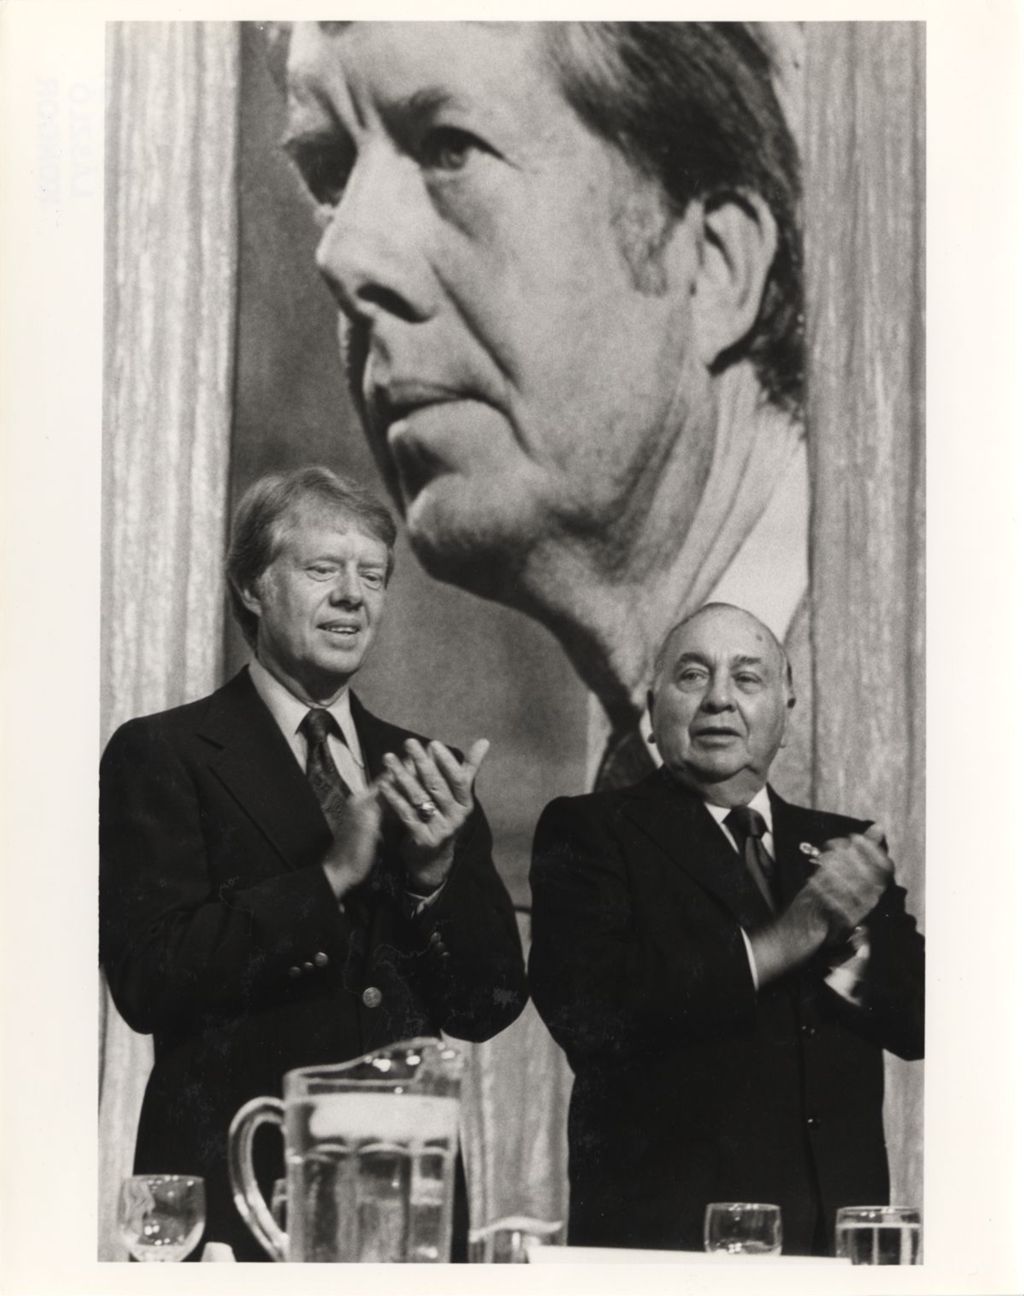 Jimmy Carter with Richard J. Daley